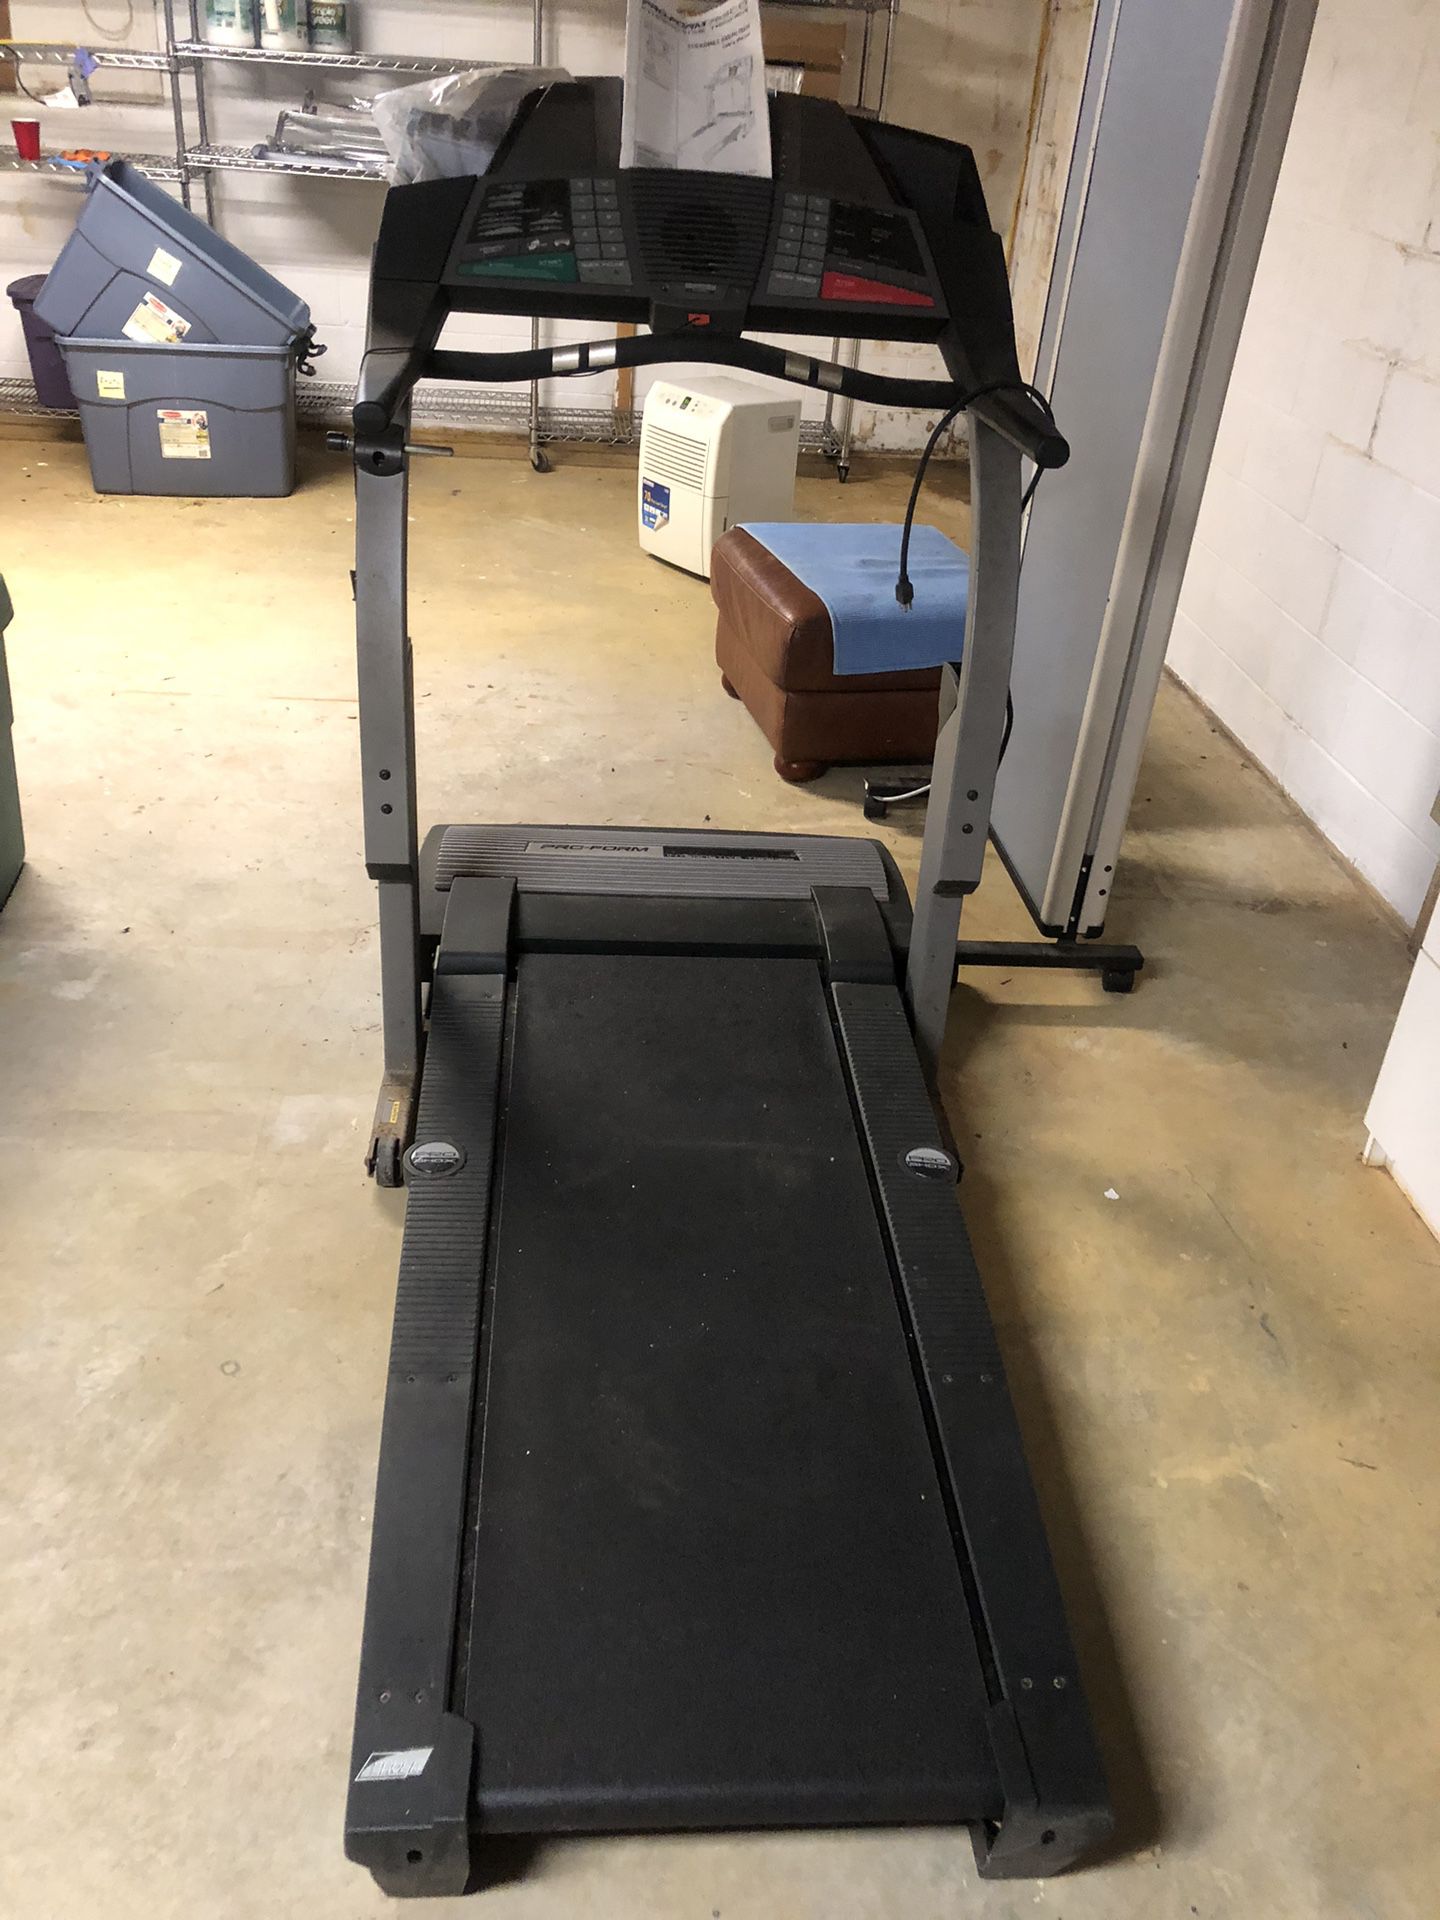 Deluxe Treadmill